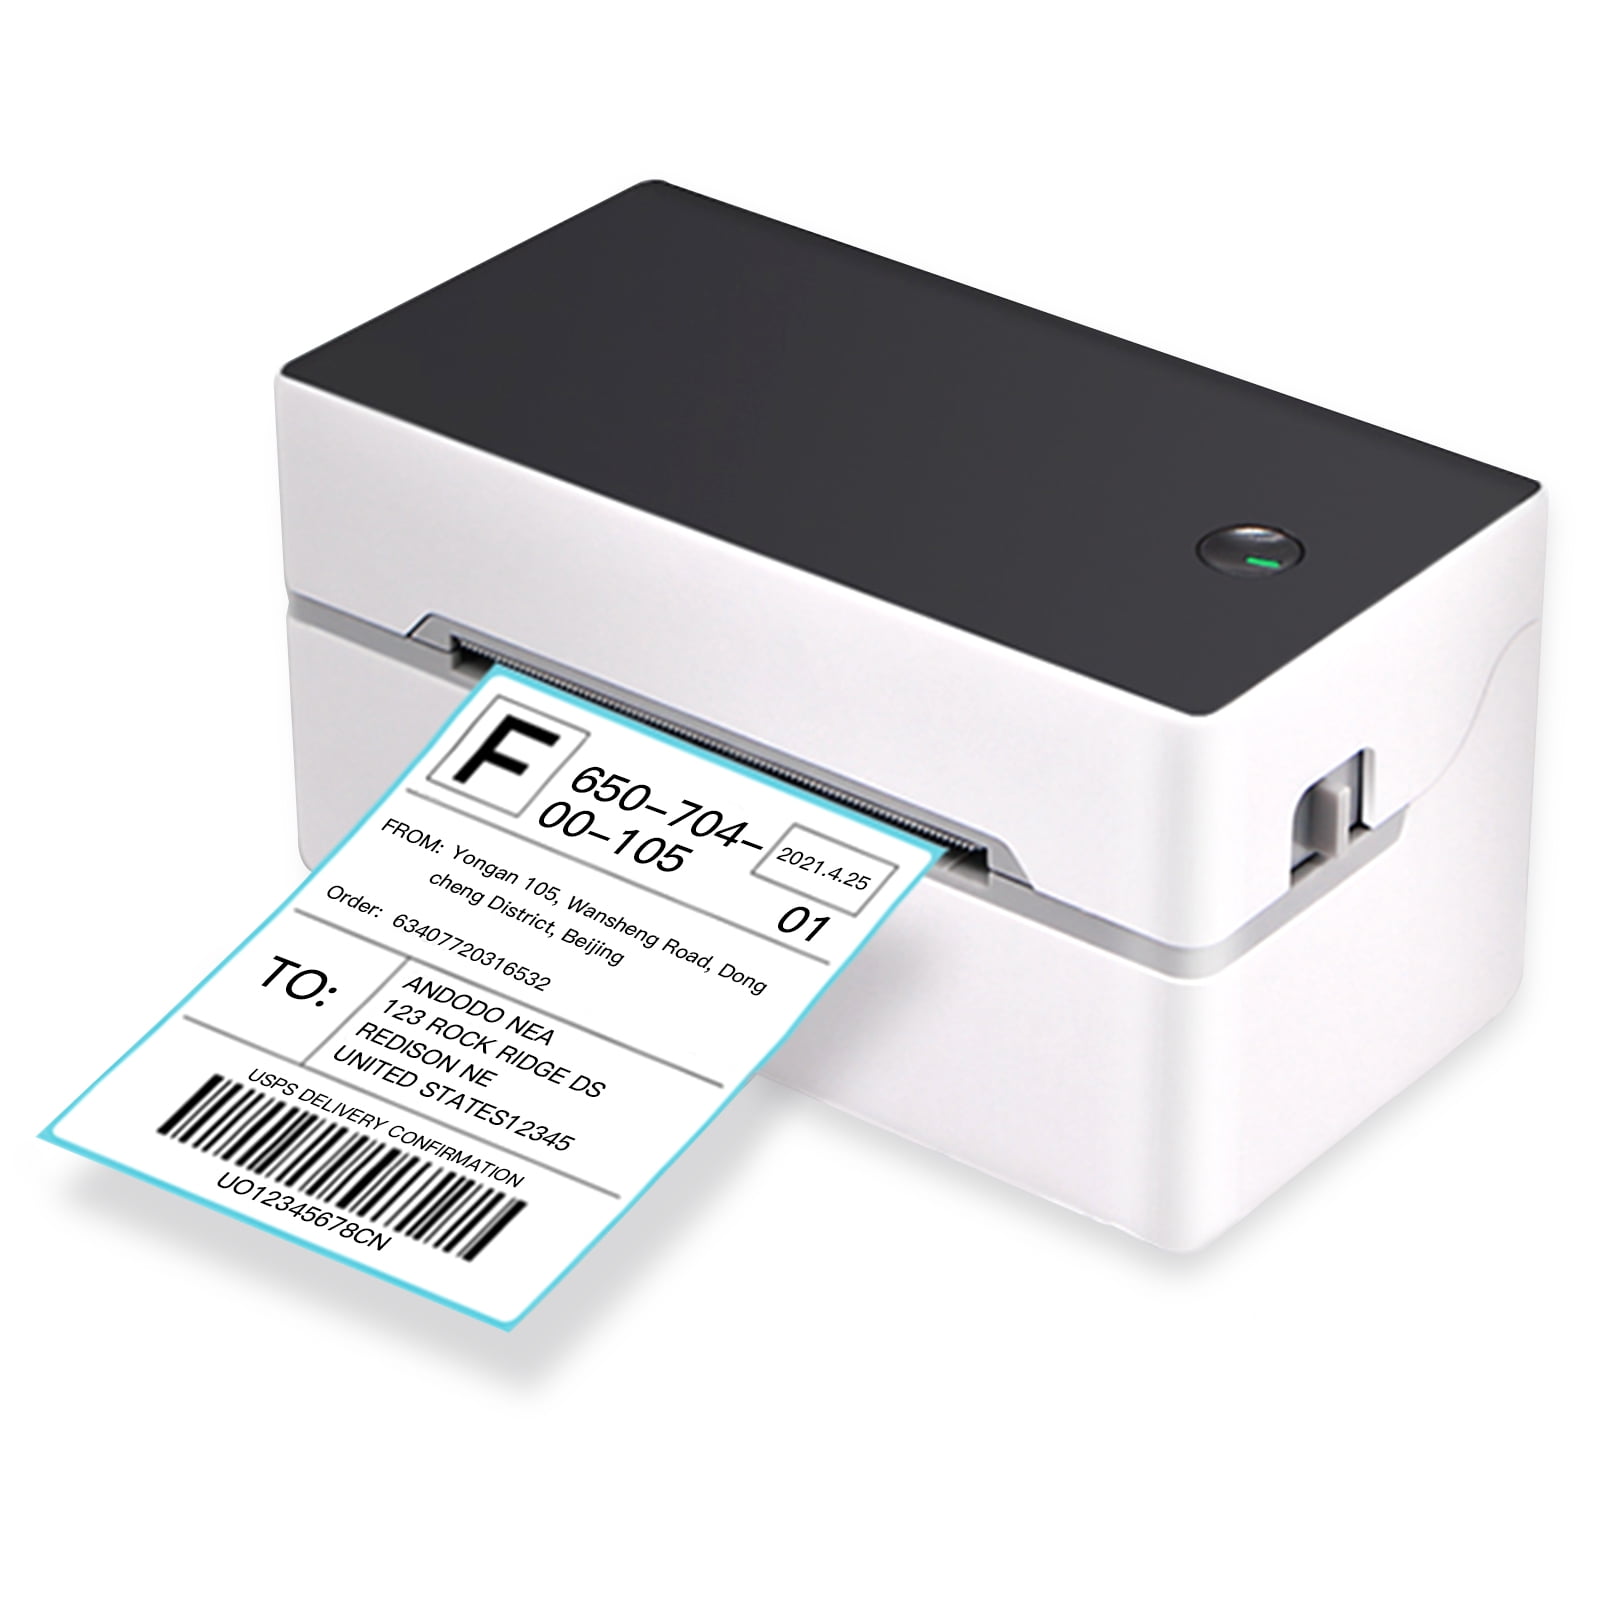 43mm USB Thermal Label Printer, PM-LB90 – Premax